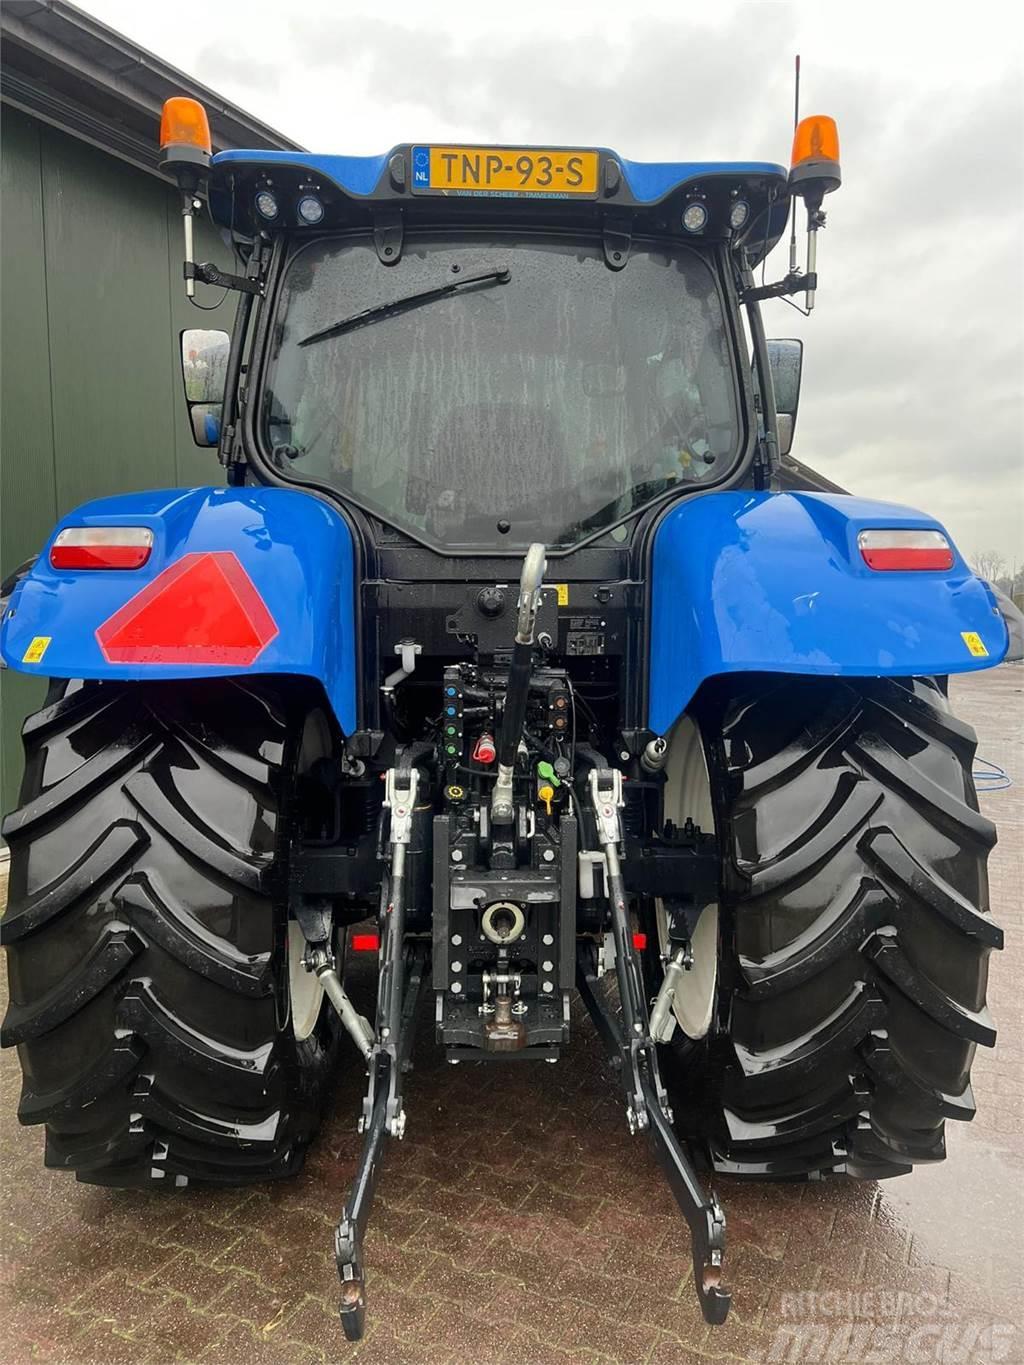 New Holland T6.125 S Traktoren